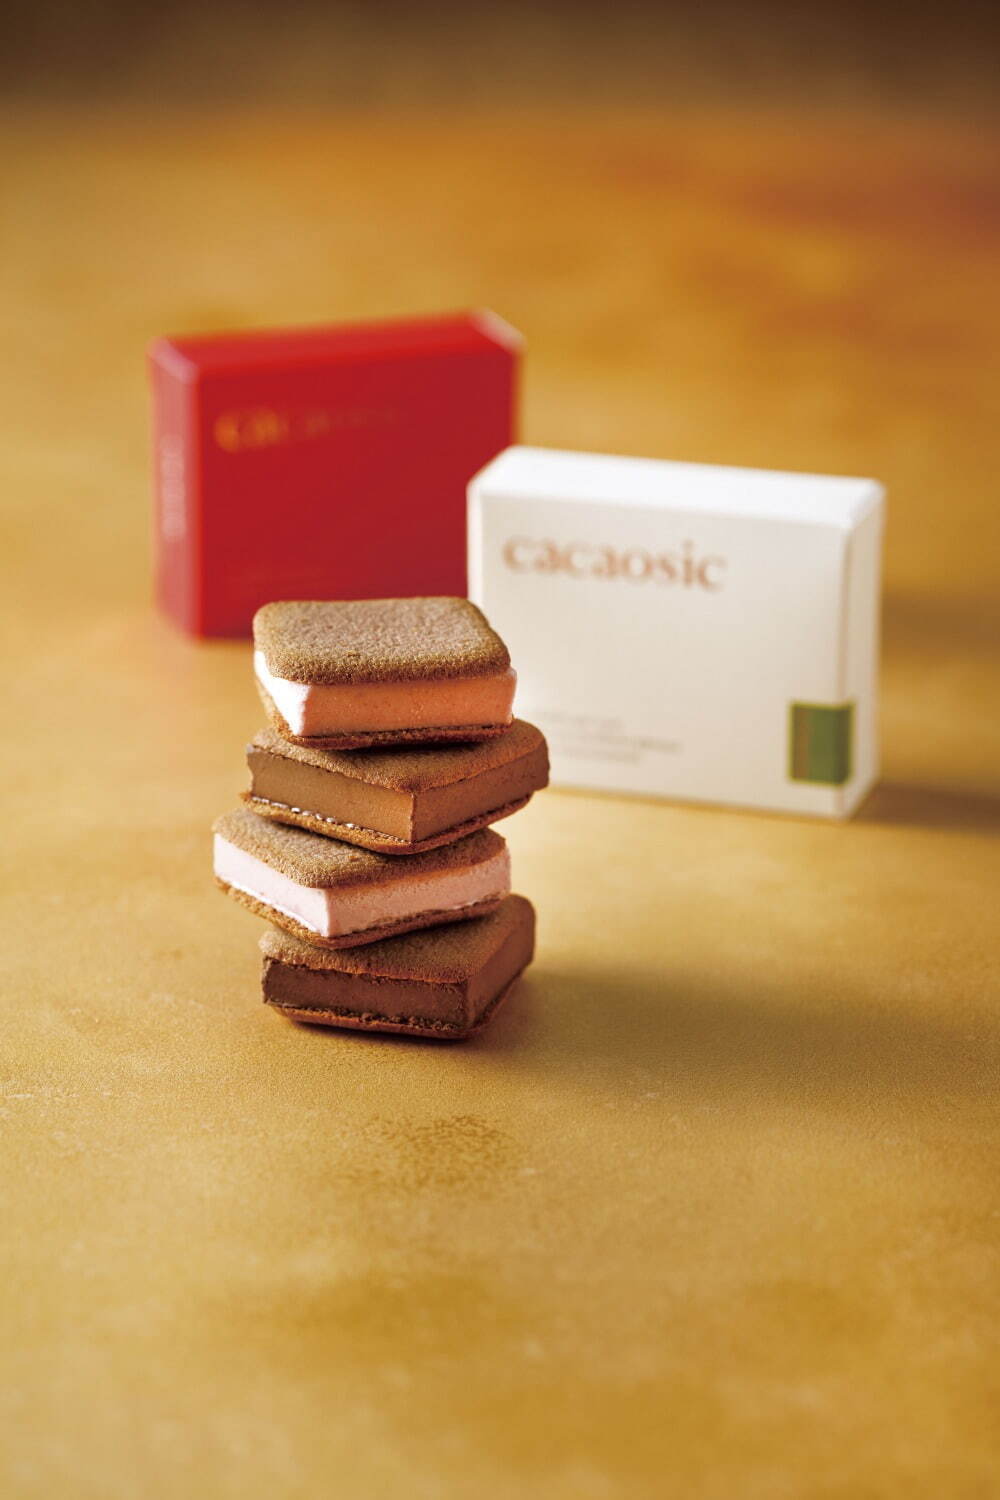 〈cacaosic〉カカオシックピスタチオ×ストロベリー 6個セット(2種×各3個入り) 2,579円